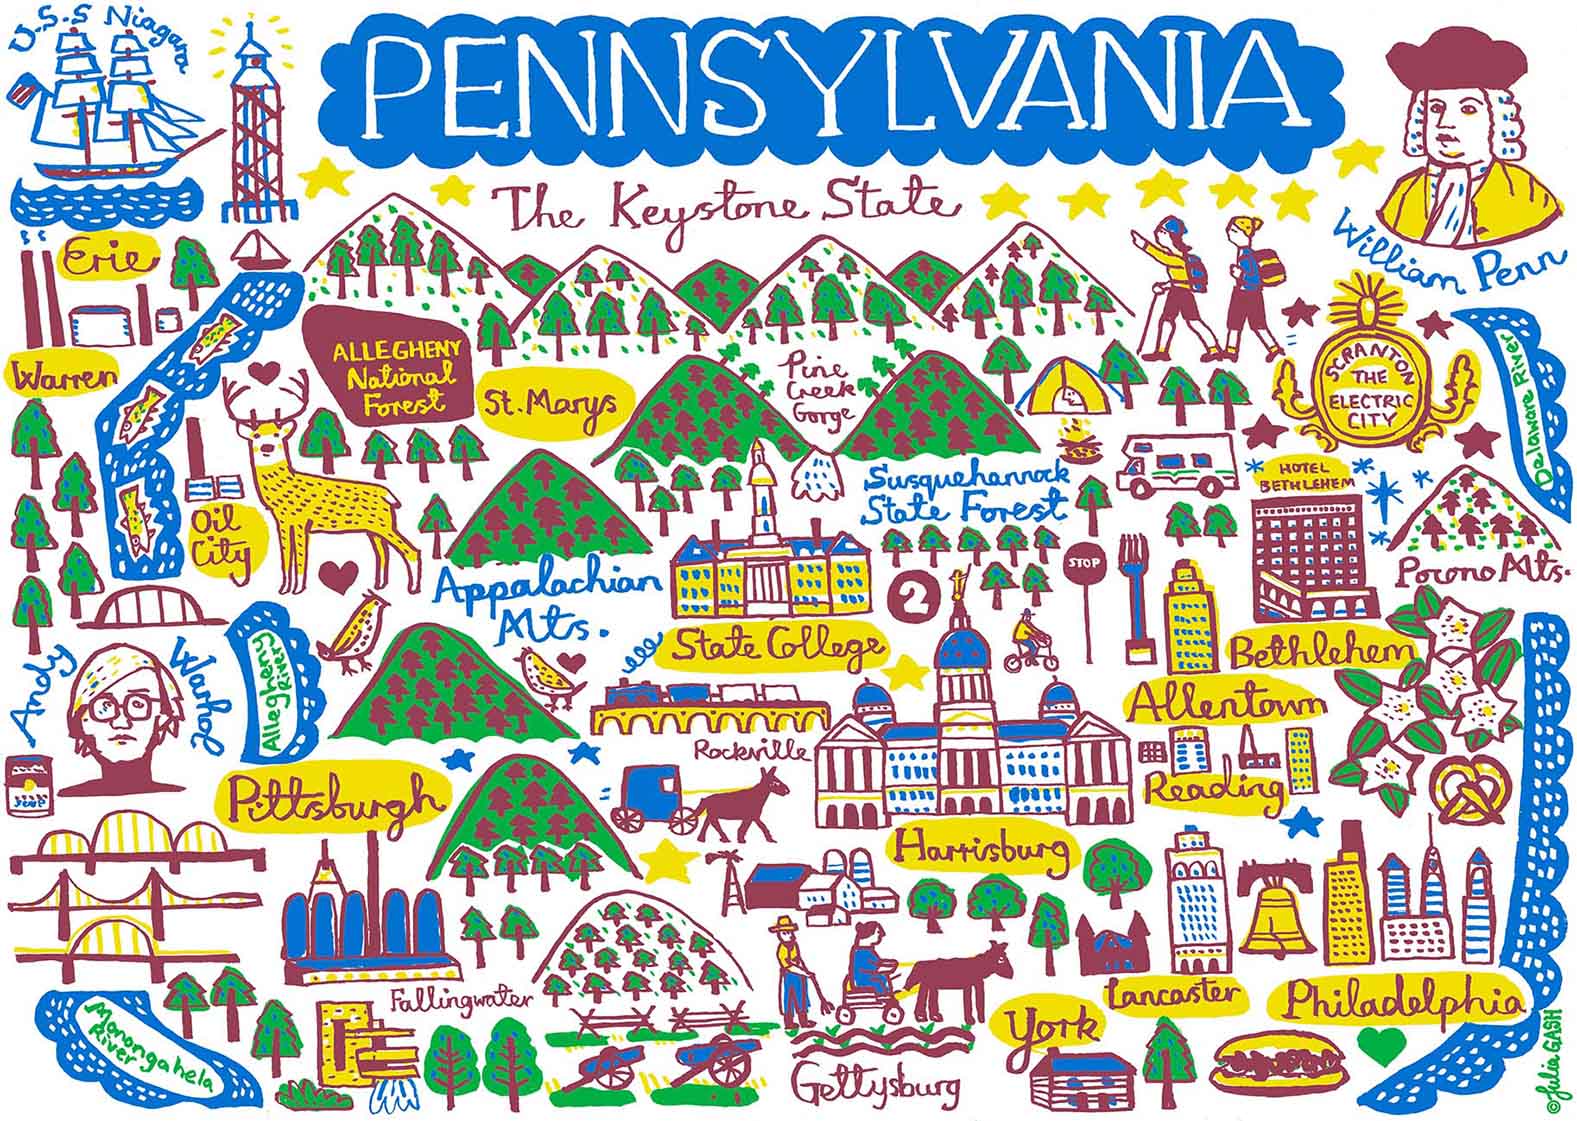 Pennsylvania Postcard - Julia Gash